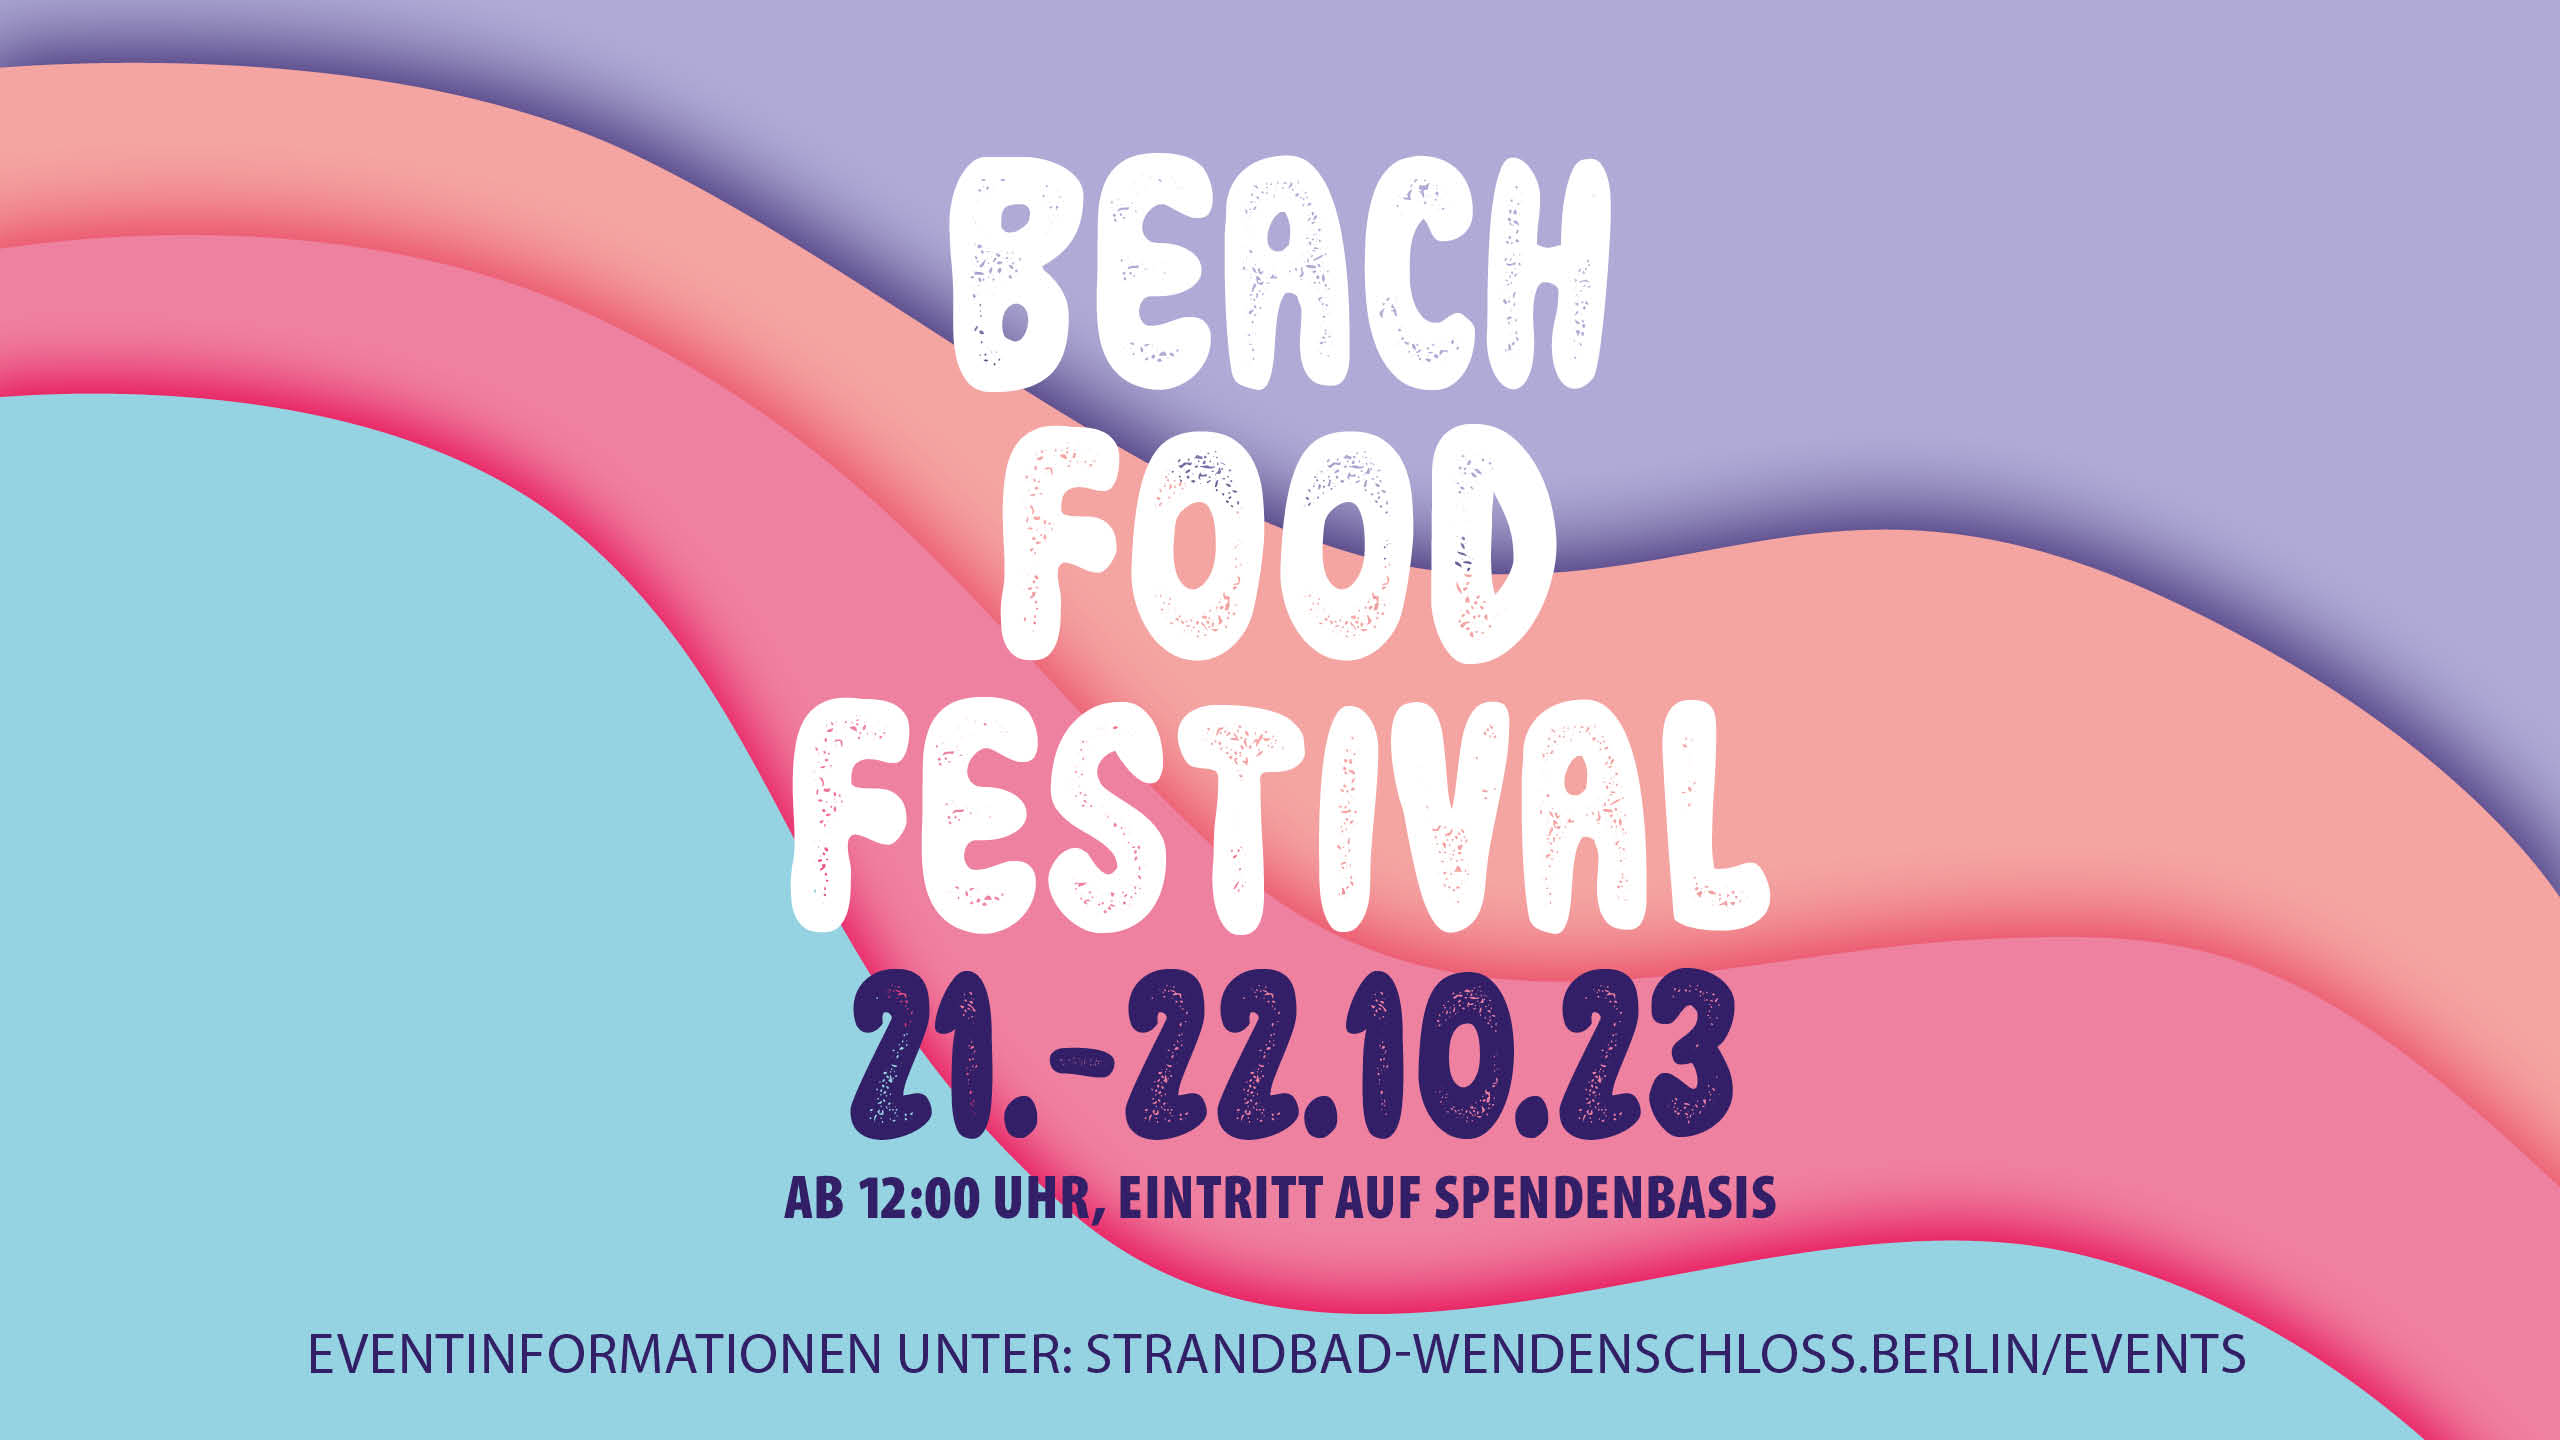 Talleres de Origami en Beachfood Festival Berlin